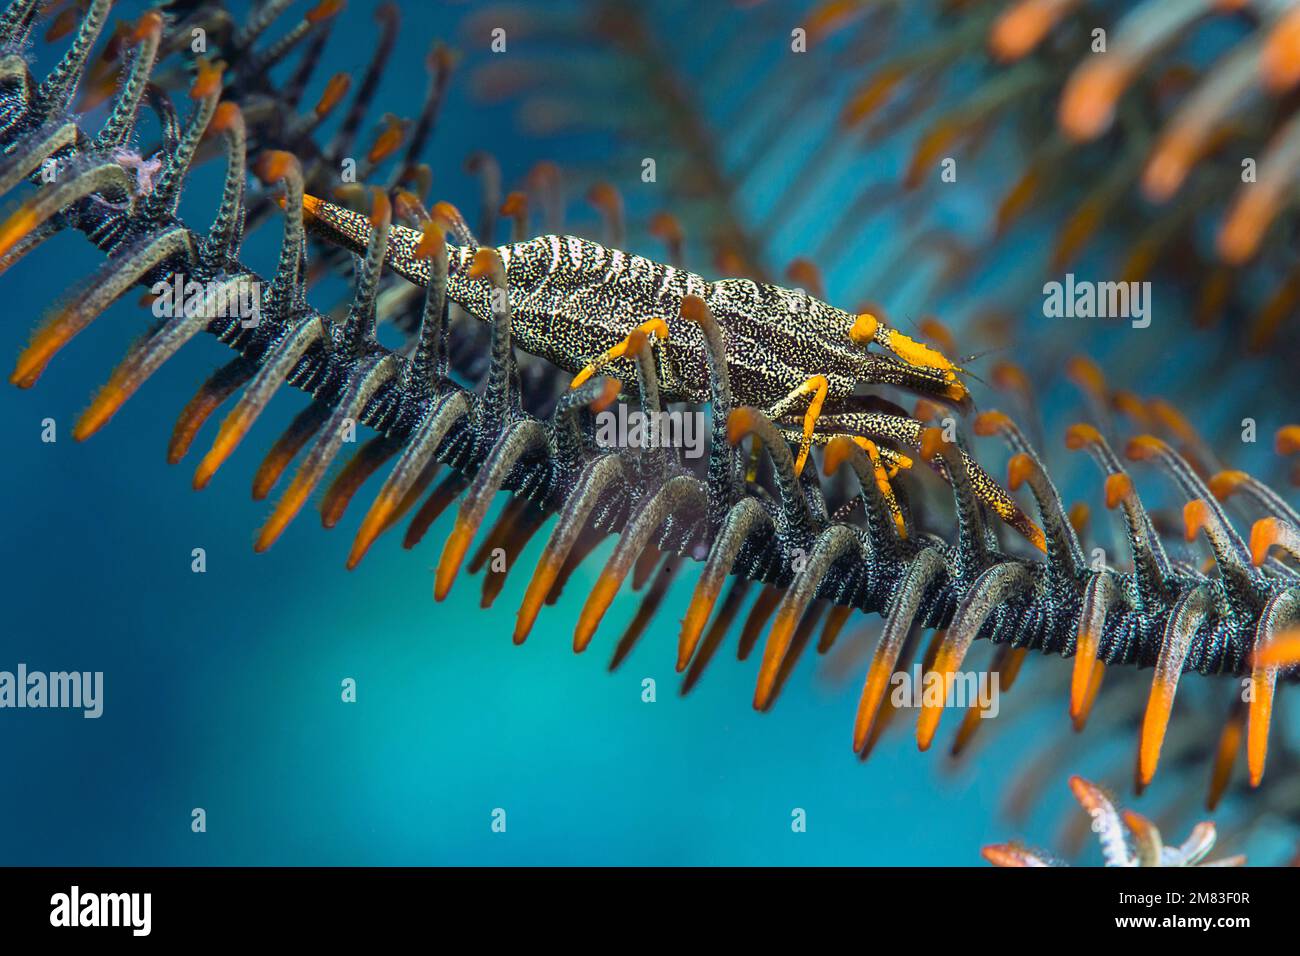 Amboinensis crinoid shrimp ( Periclimenes amboinensis ) on a feather star crinoid of Bali, Indonesia Stock Photo